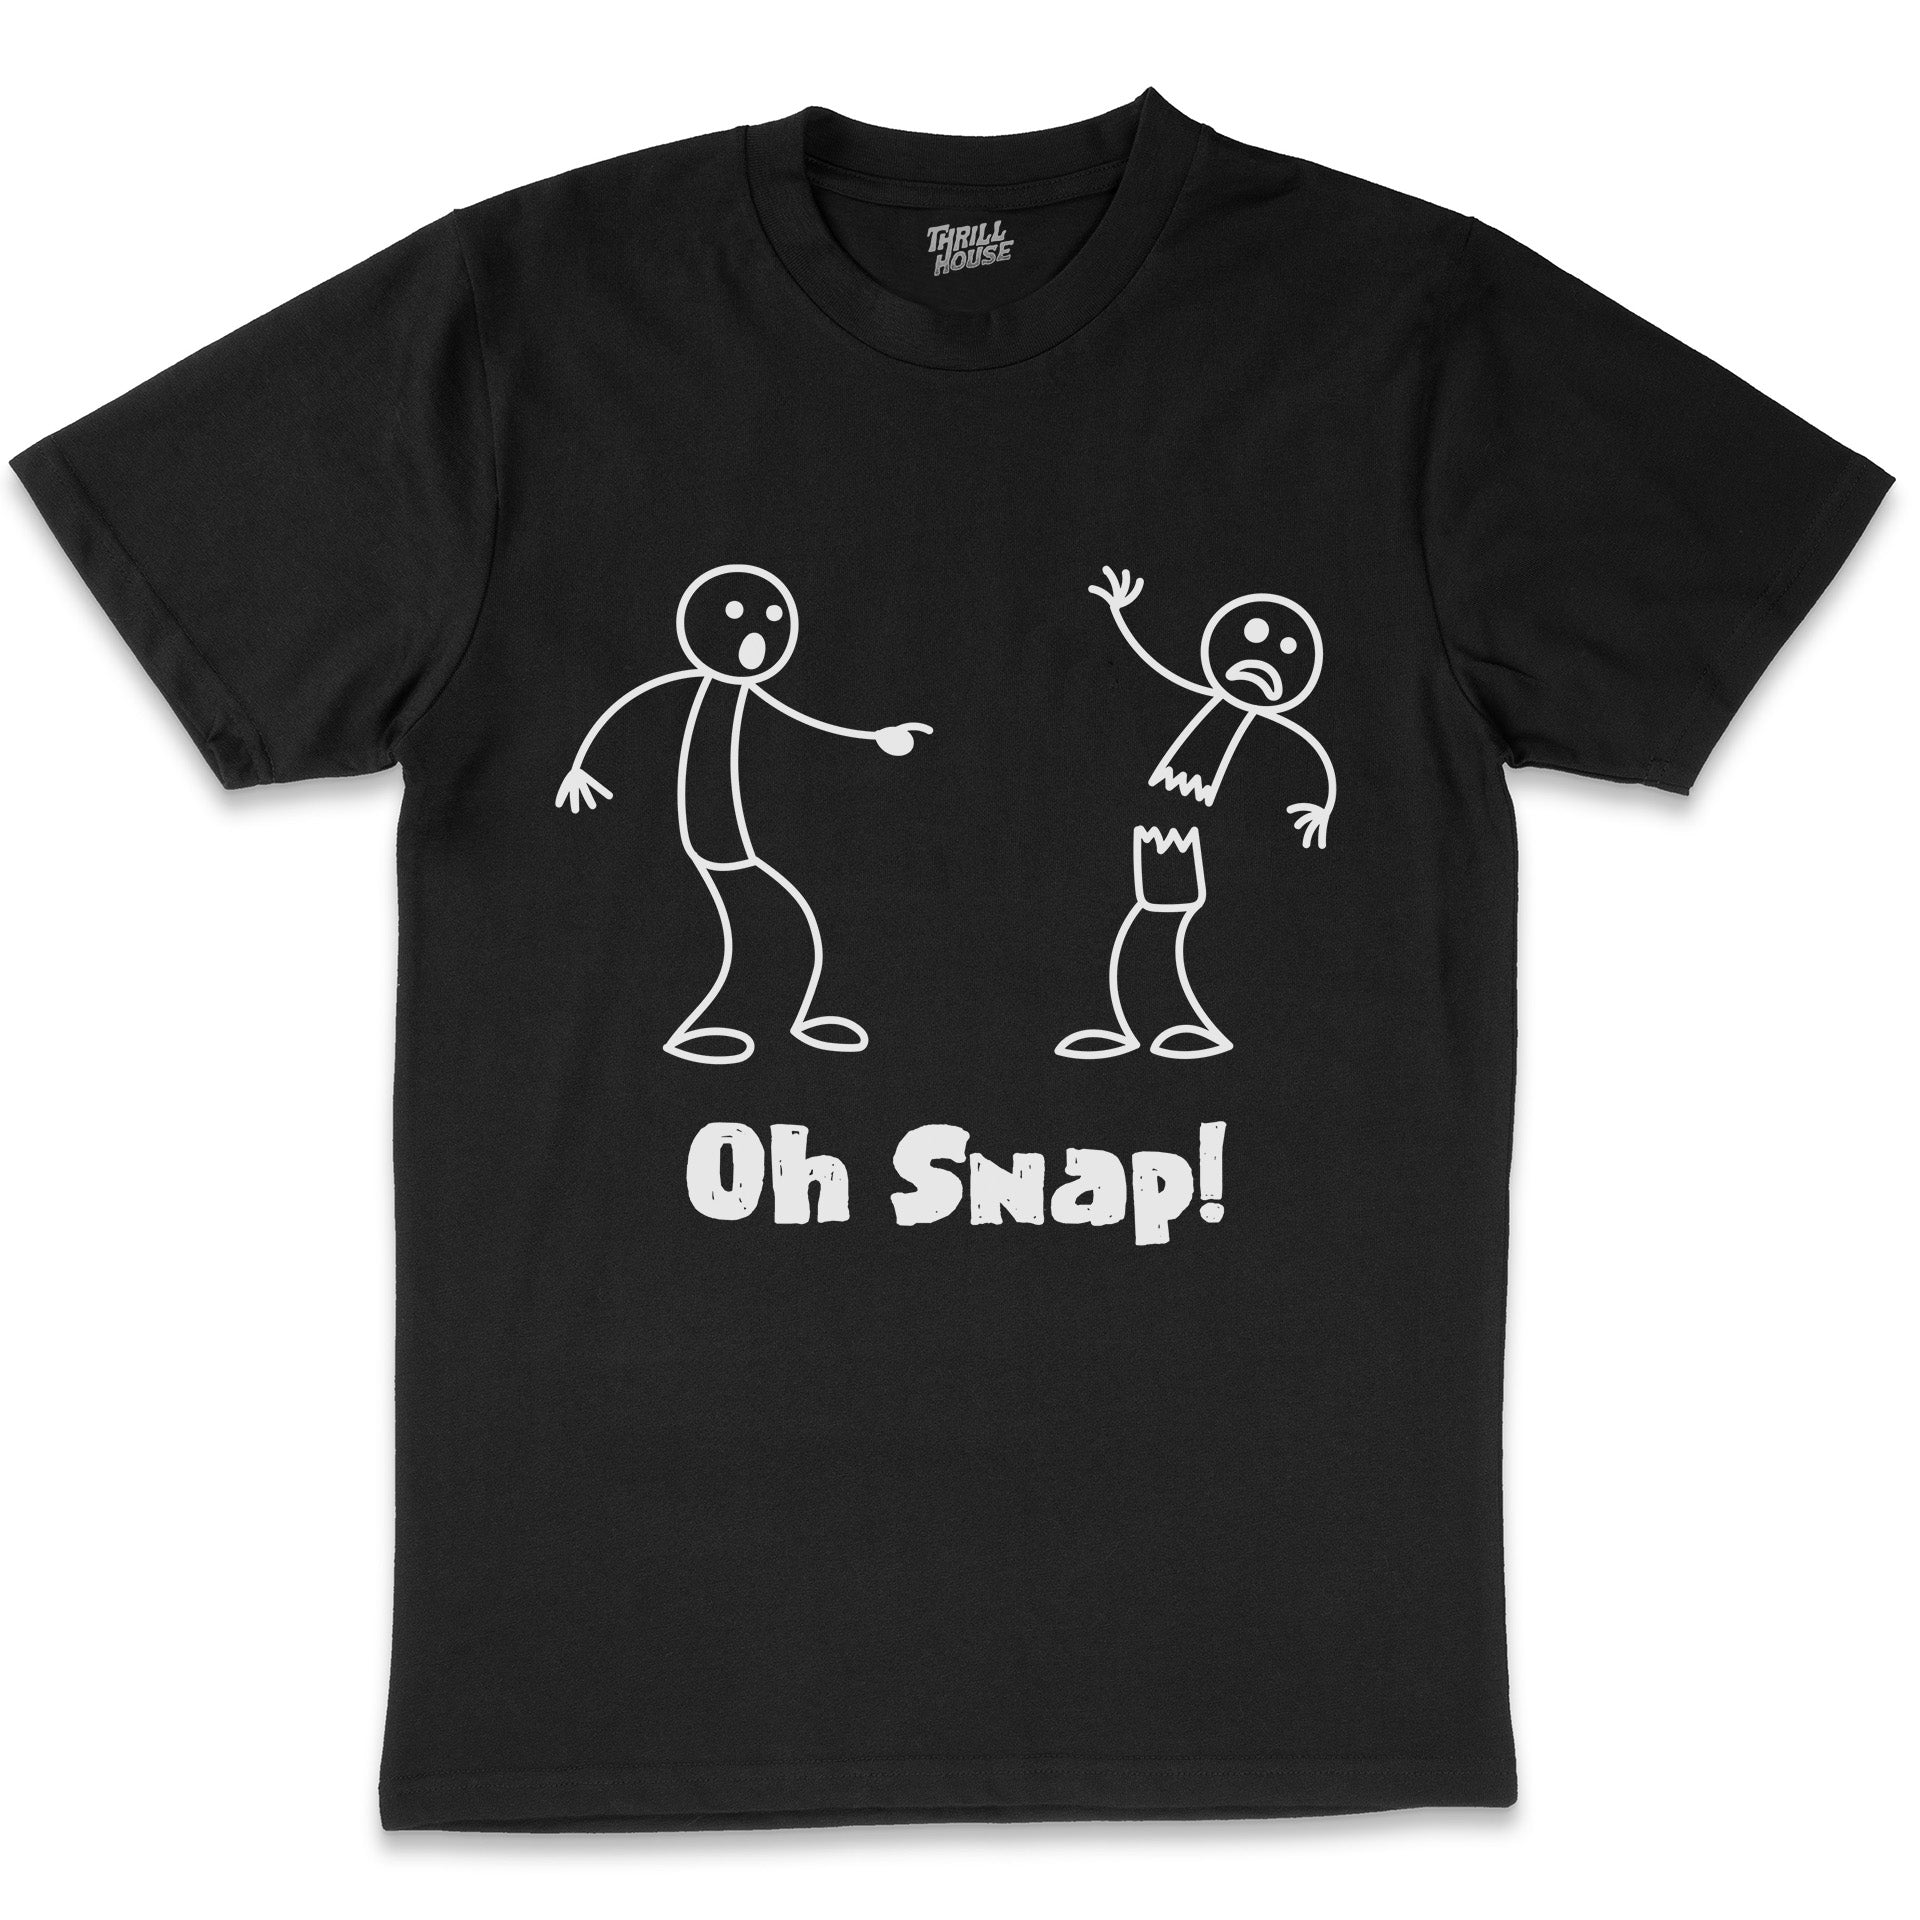 Oh Snap Funny Stick Figure Slogan Saying Cotton T-Shirt